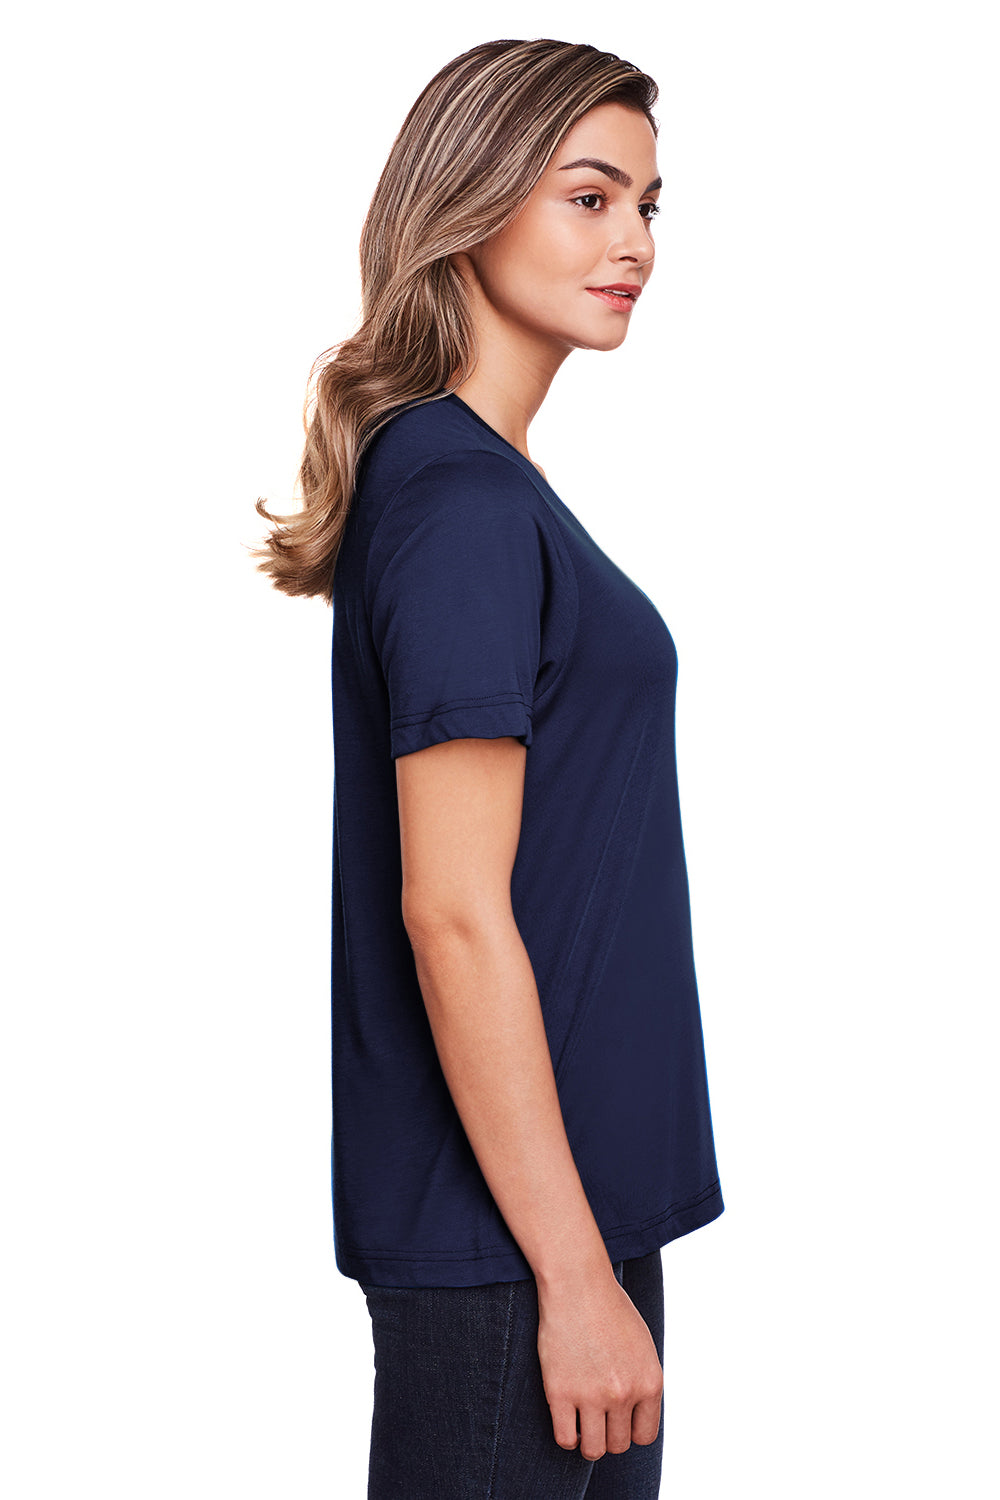 Core 365 CE111W Womens Fusion ChromaSoft Performance Moisture Wicking Short Sleeve Scoop Neck T-Shirt Navy Blue Side